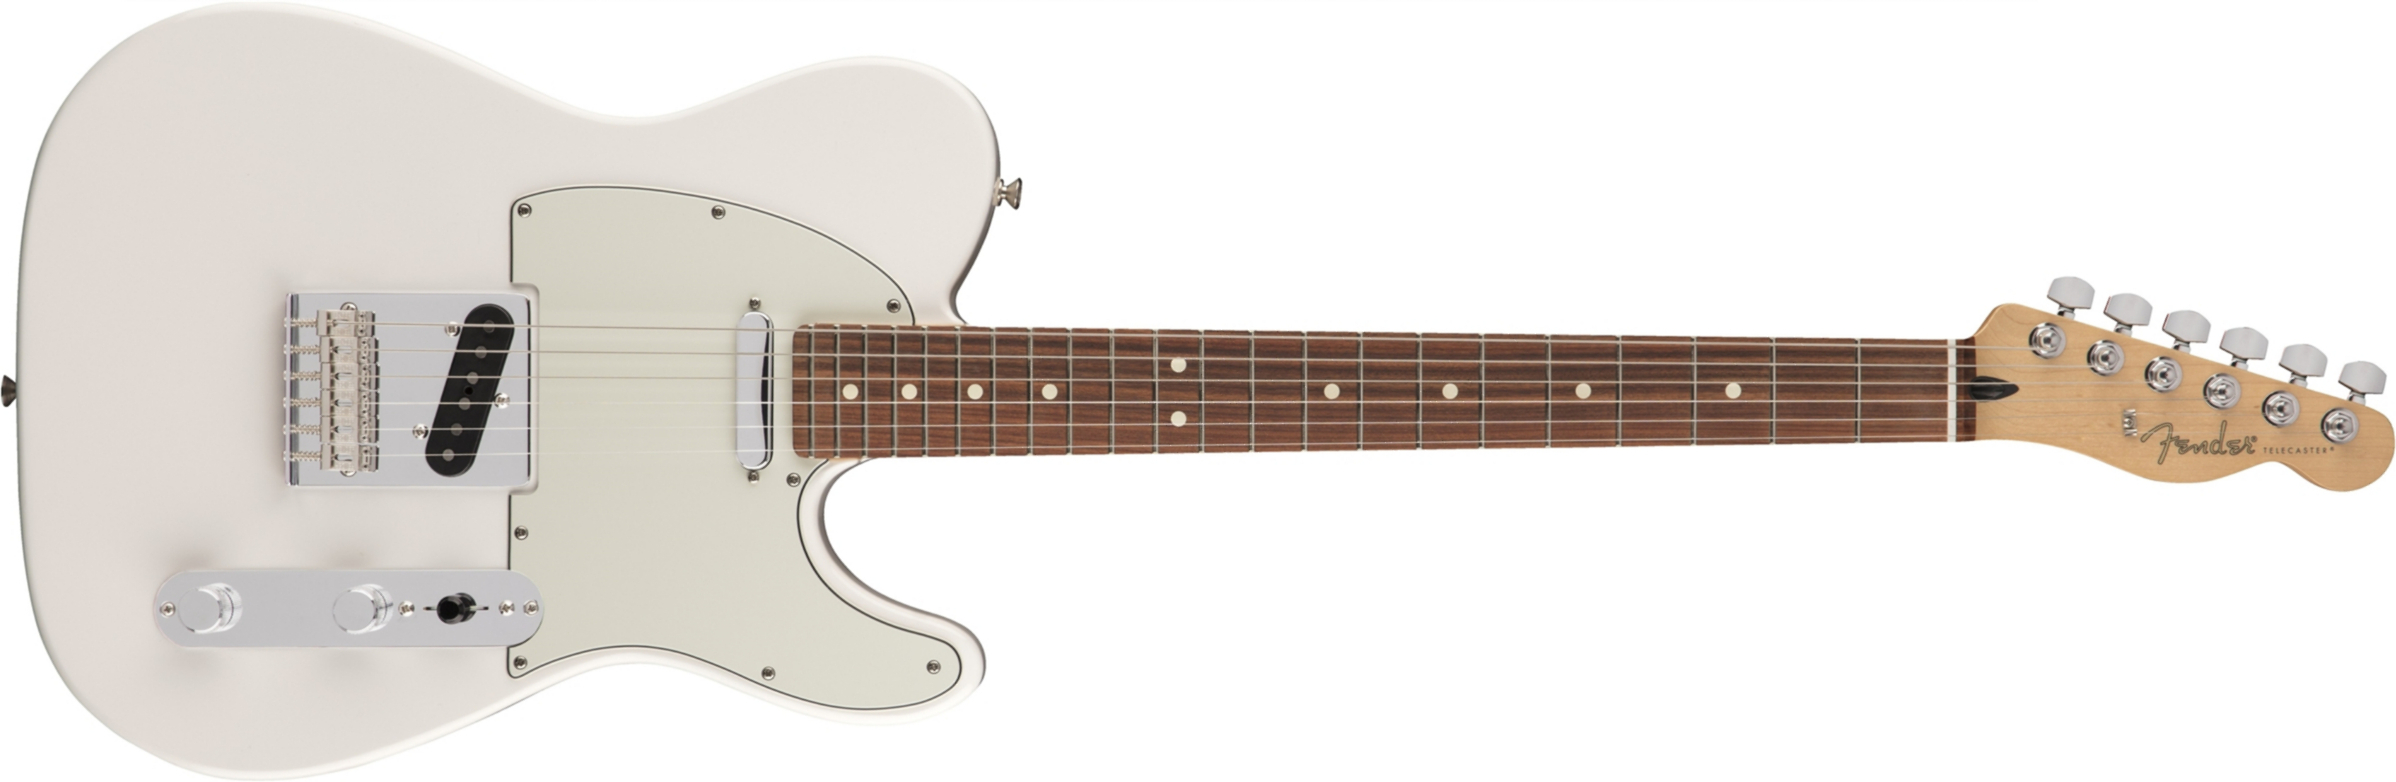 Fender Tele Player Mex Ss Pf - Polar White - Televorm elektrische gitaar - Main picture